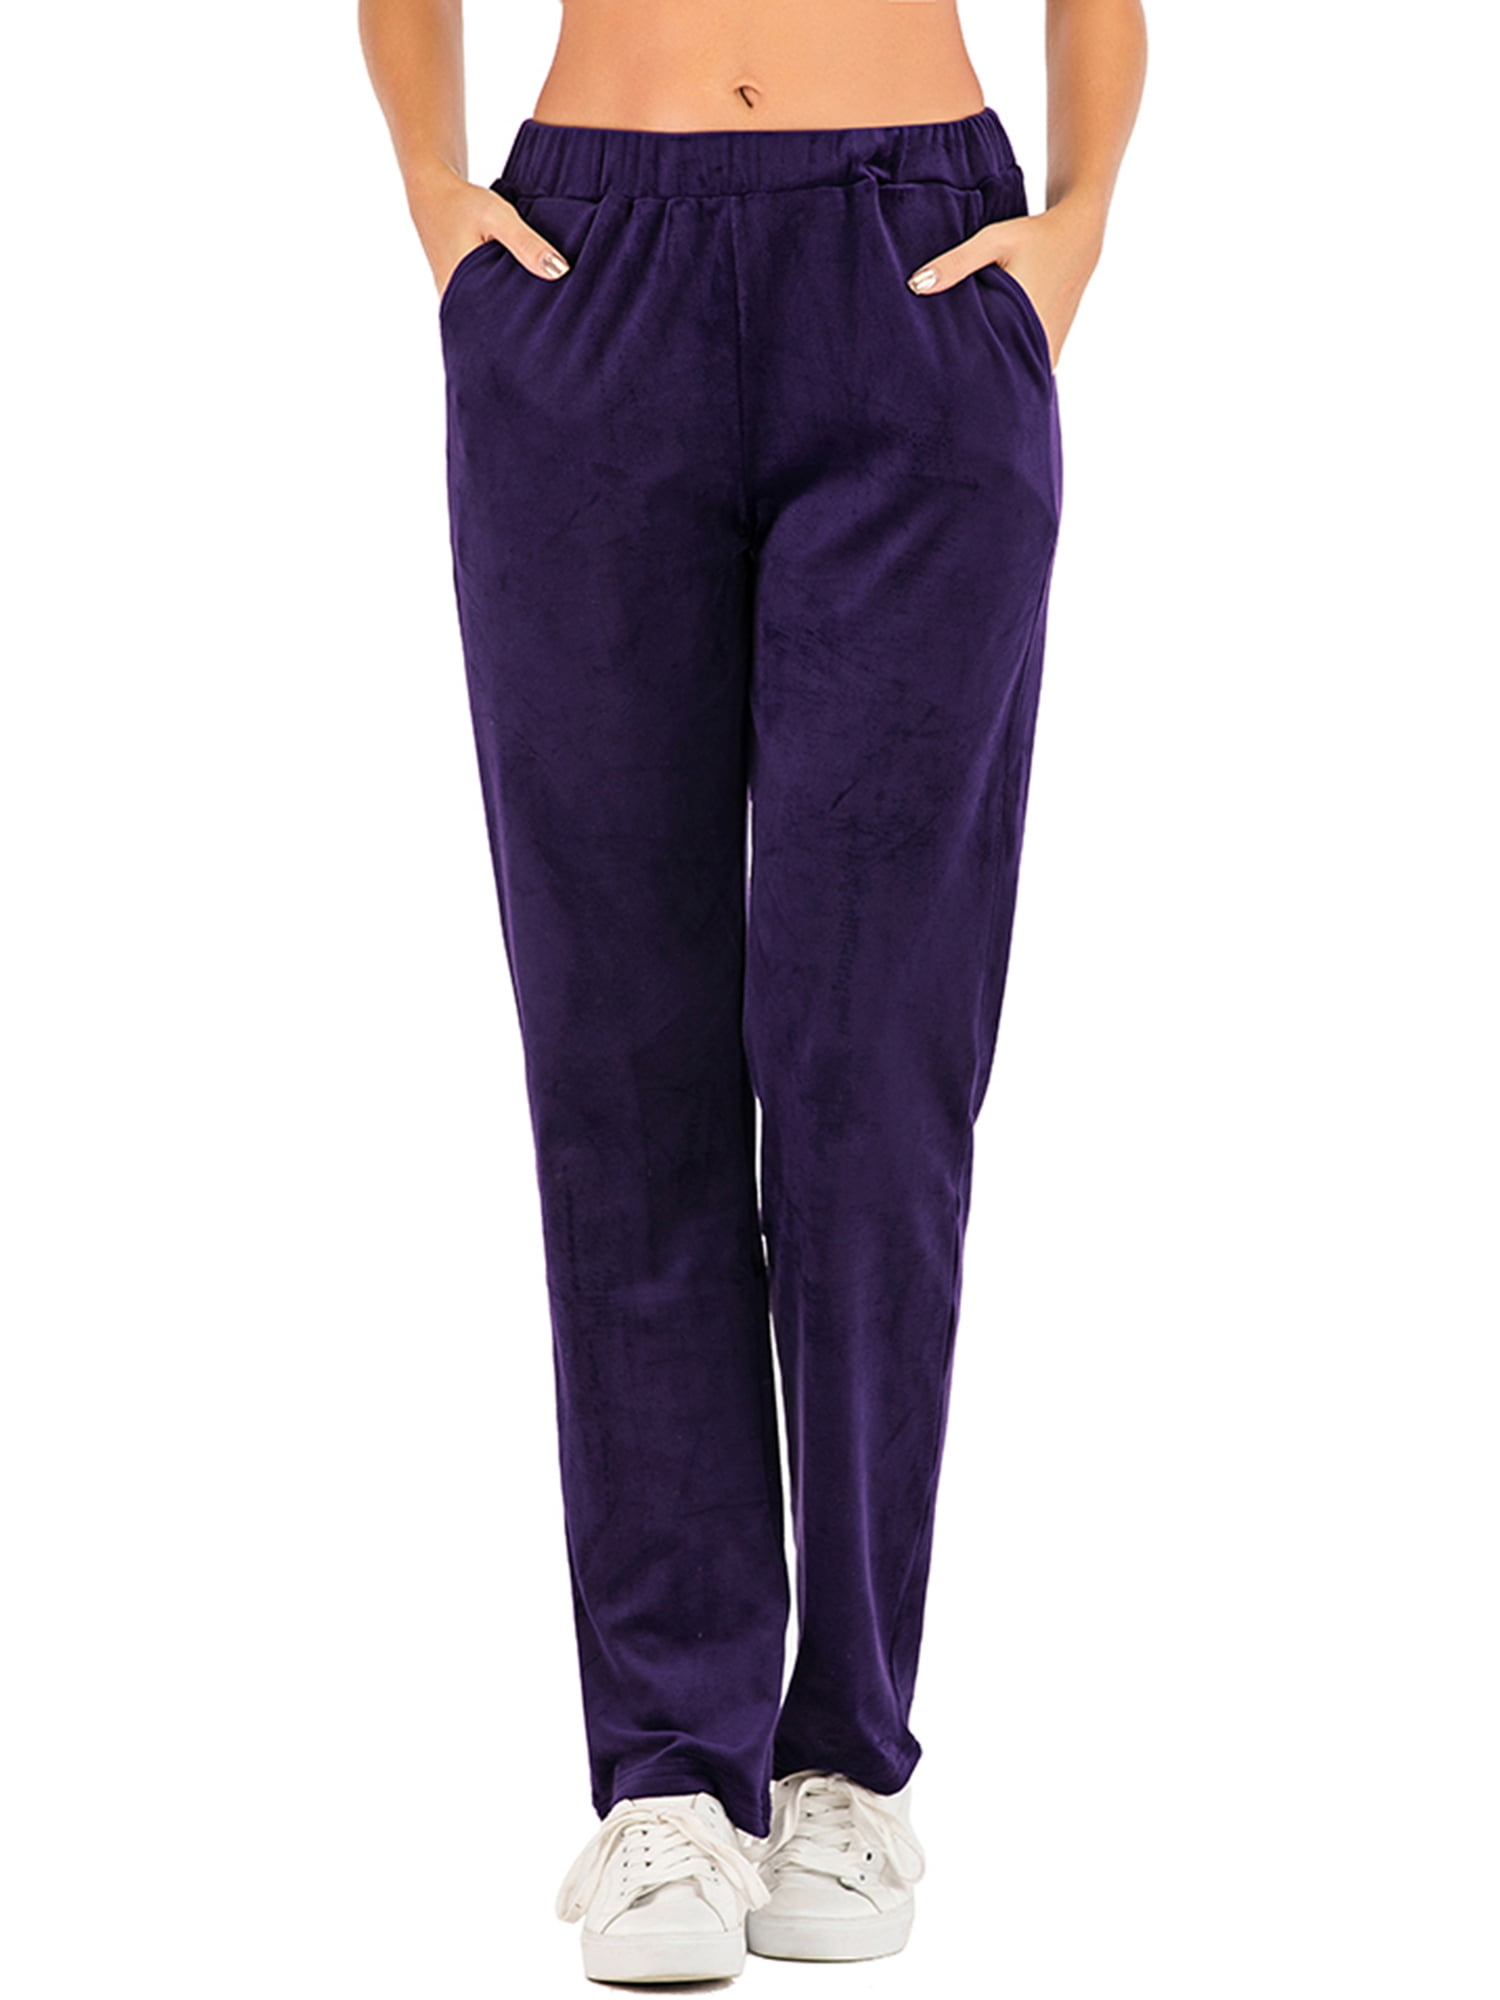 LELINTA Women's Active Yoga Sweatpants Workout Joggers Pants Lounge Sweat  Pants with Pockets, Red/ Purple, S-2XL - Walmart.com